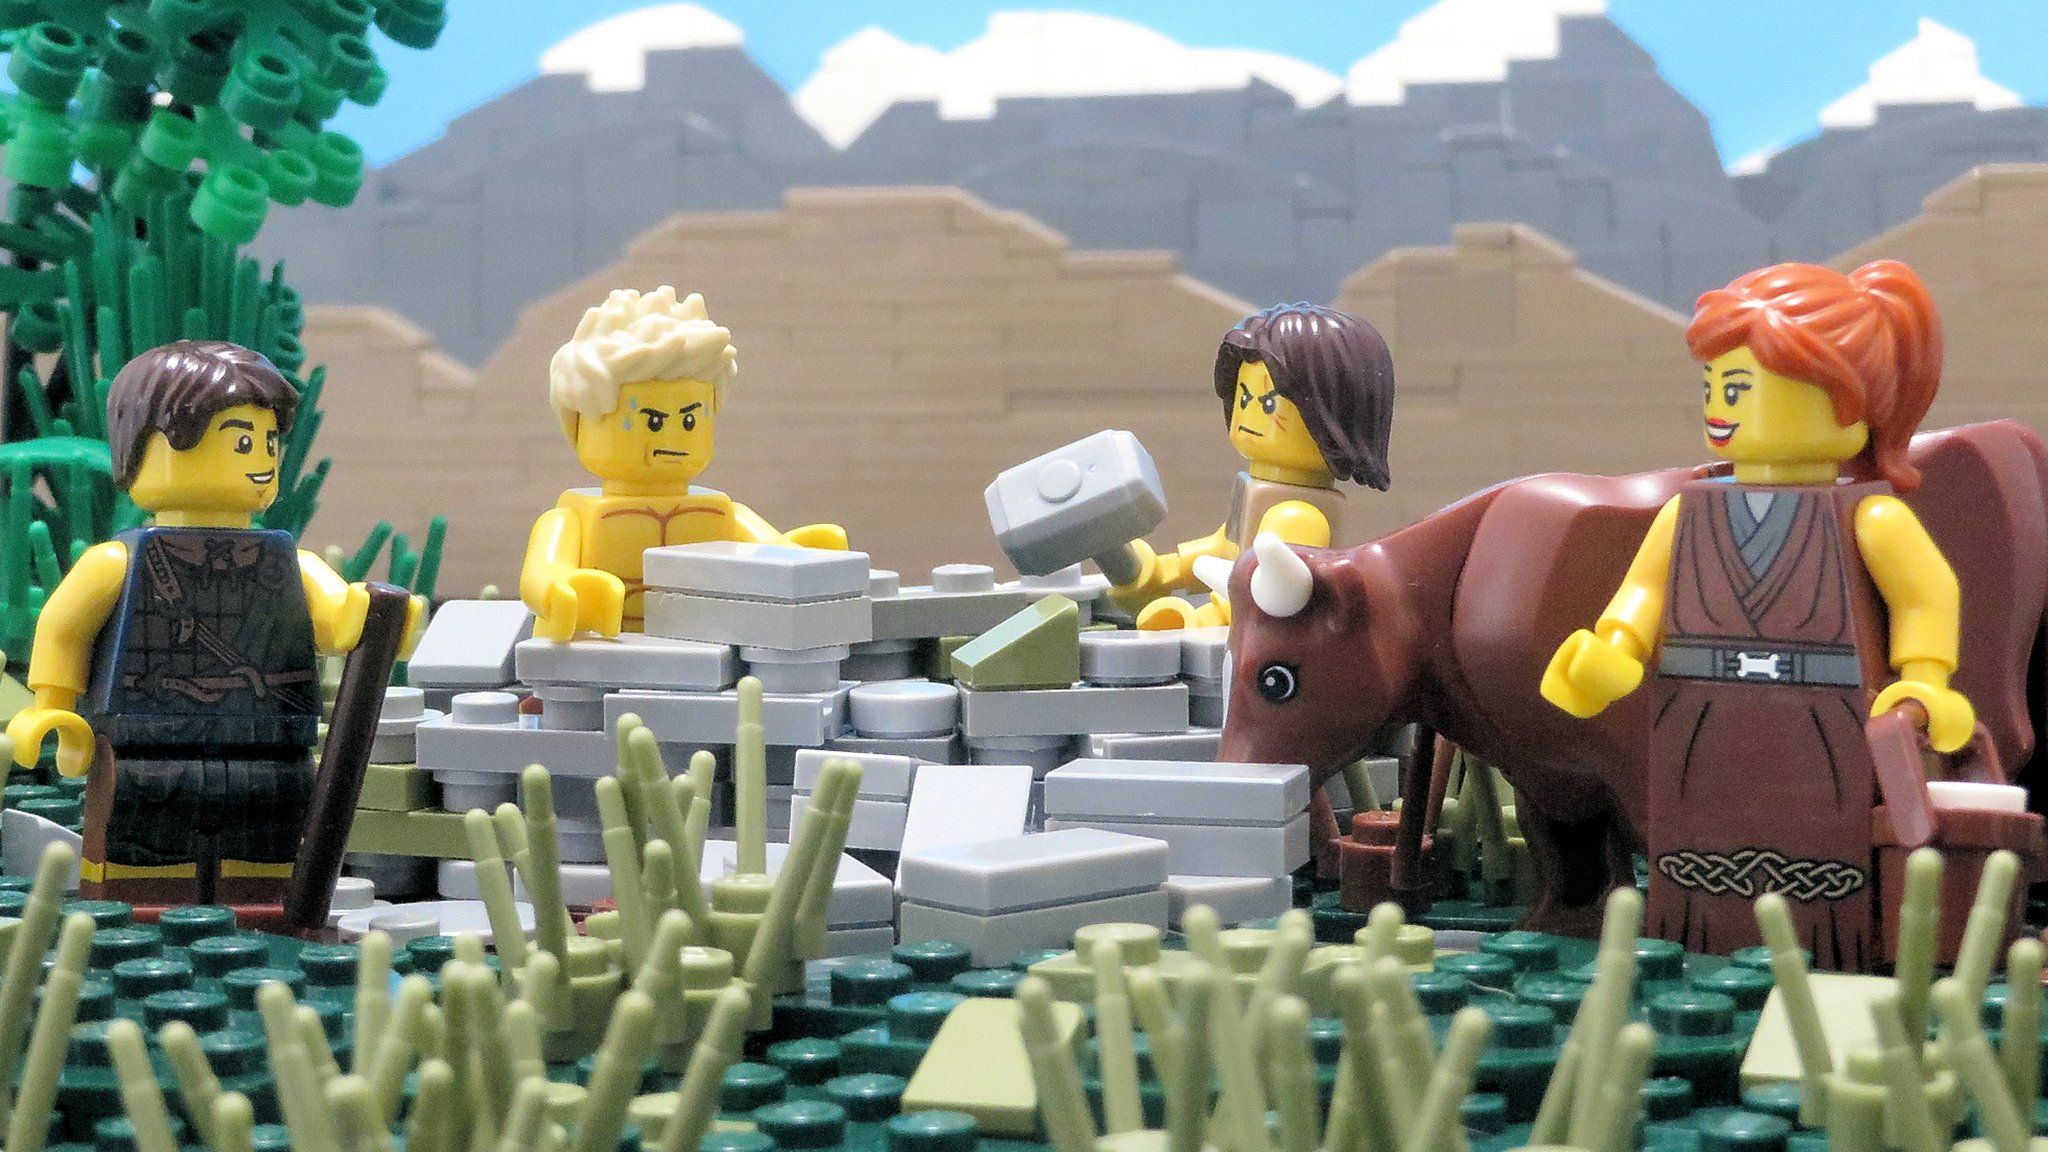 Lego scene